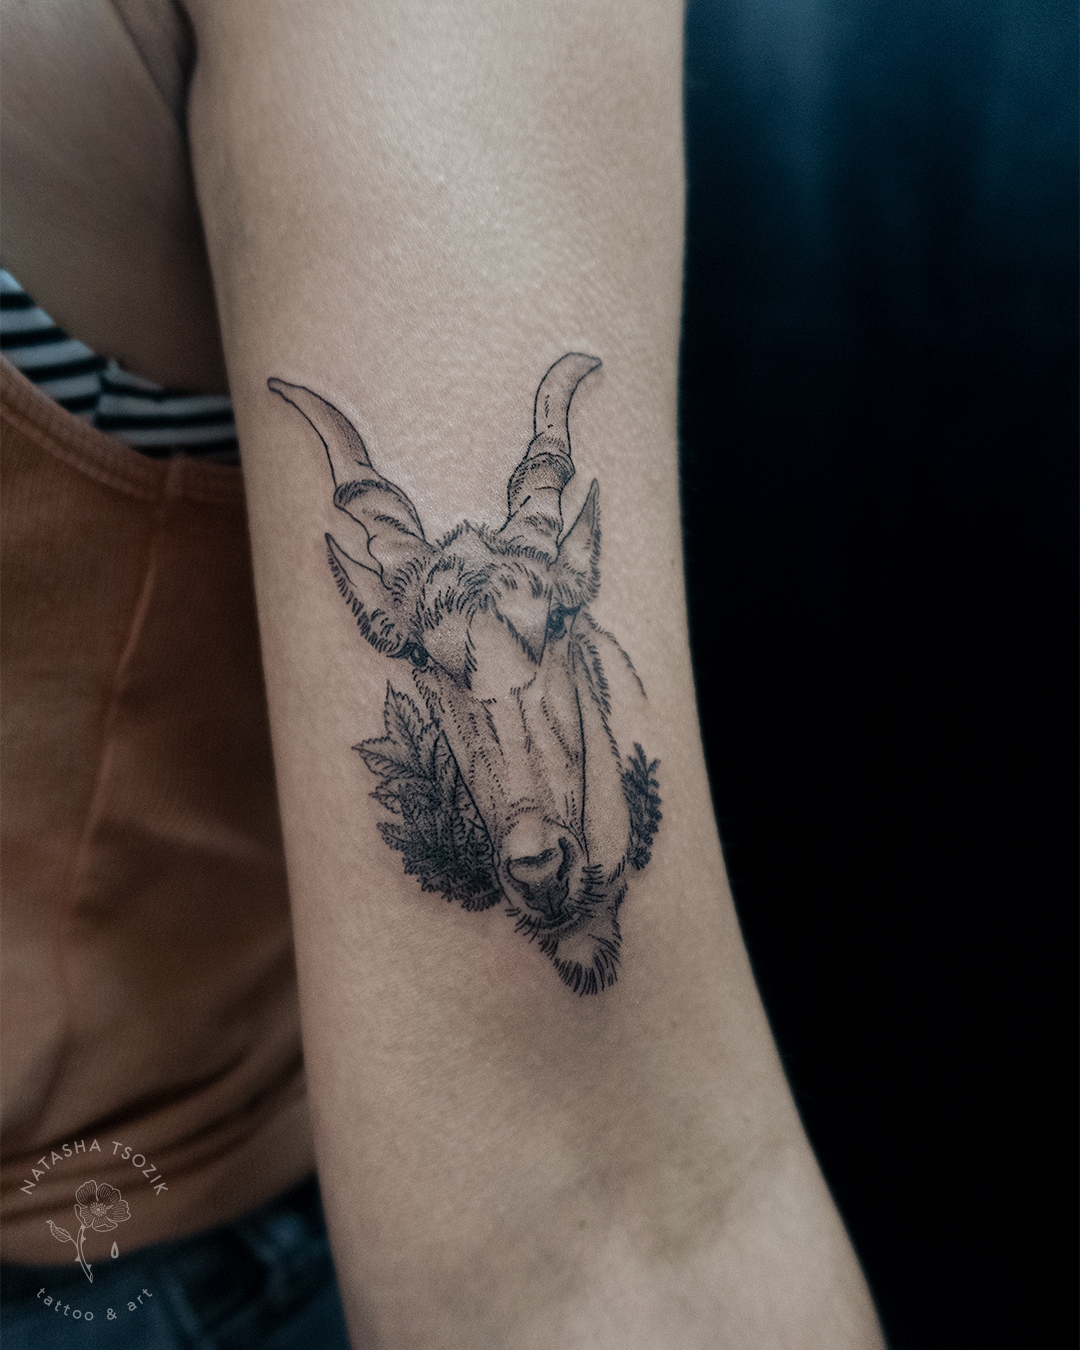 An eland tattoo on an inner bicep.